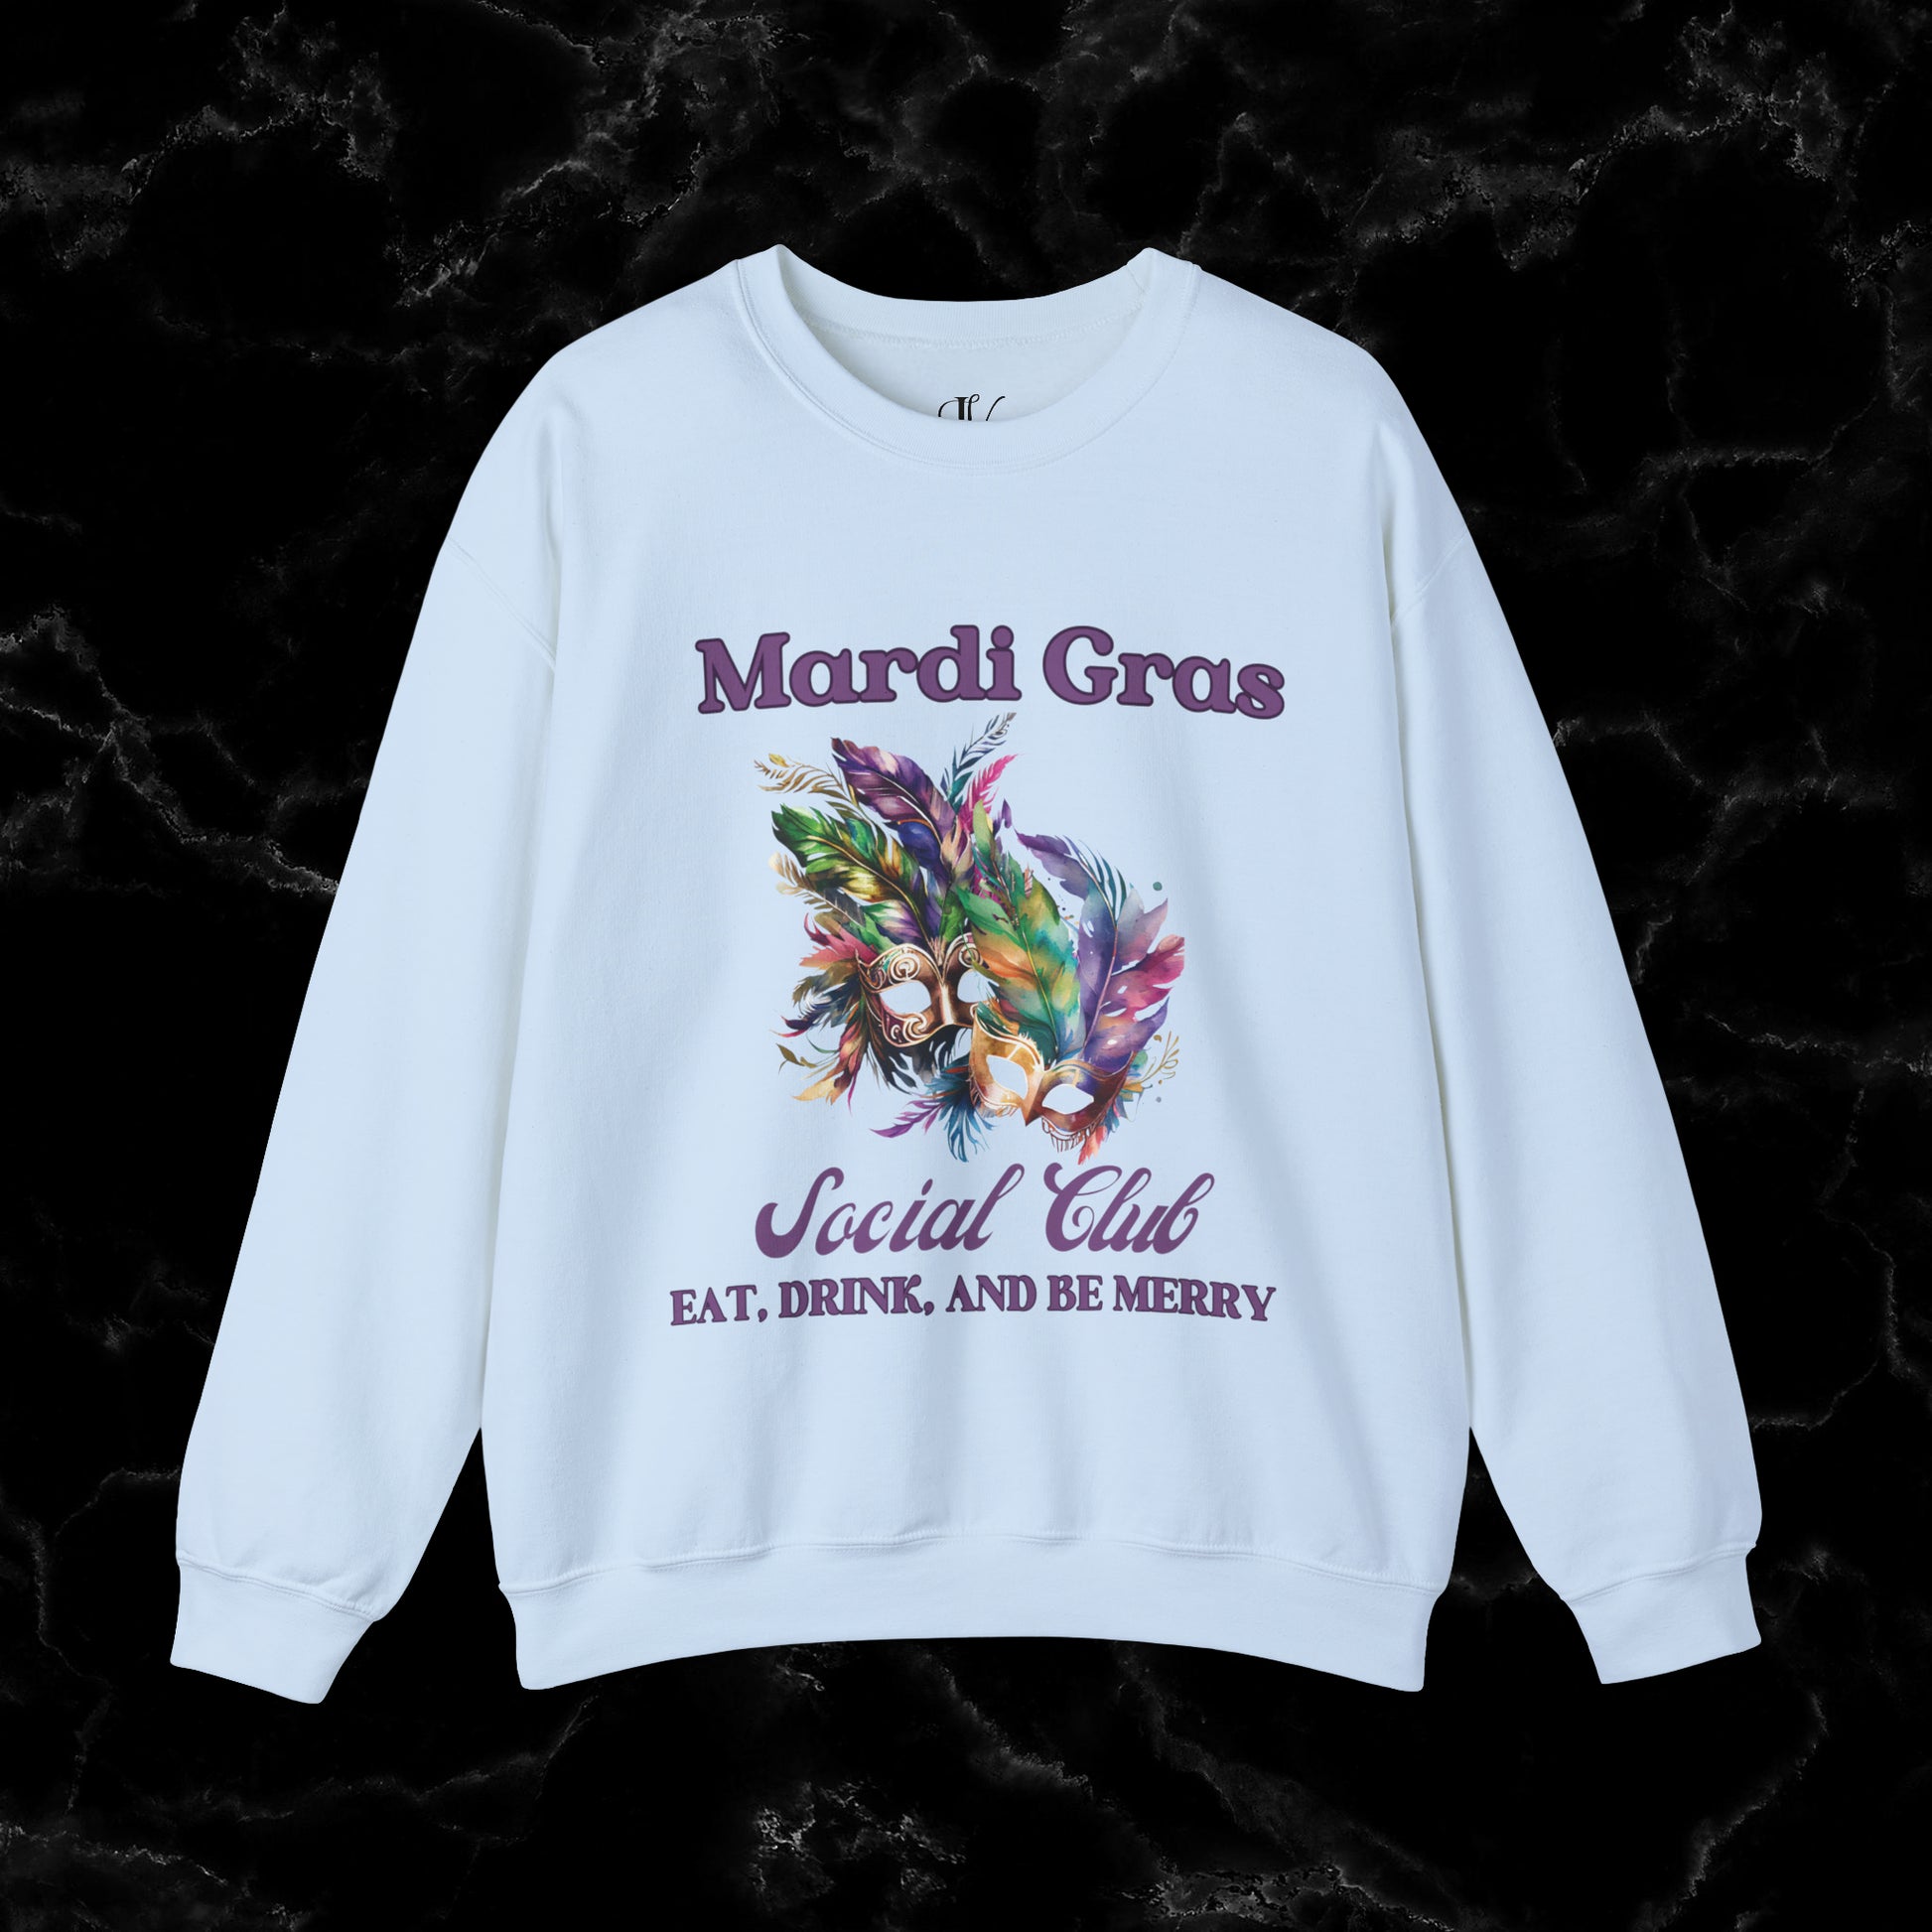 Mardi Gras Sweatshirt Women - NOLA Luxury Bachelorette Sweater, Unique Fat Tuesday Shirt, Louisiana Girls Trip Sweater, Mardi Gras Social Club Chic Sweatshirt S Light Blue 